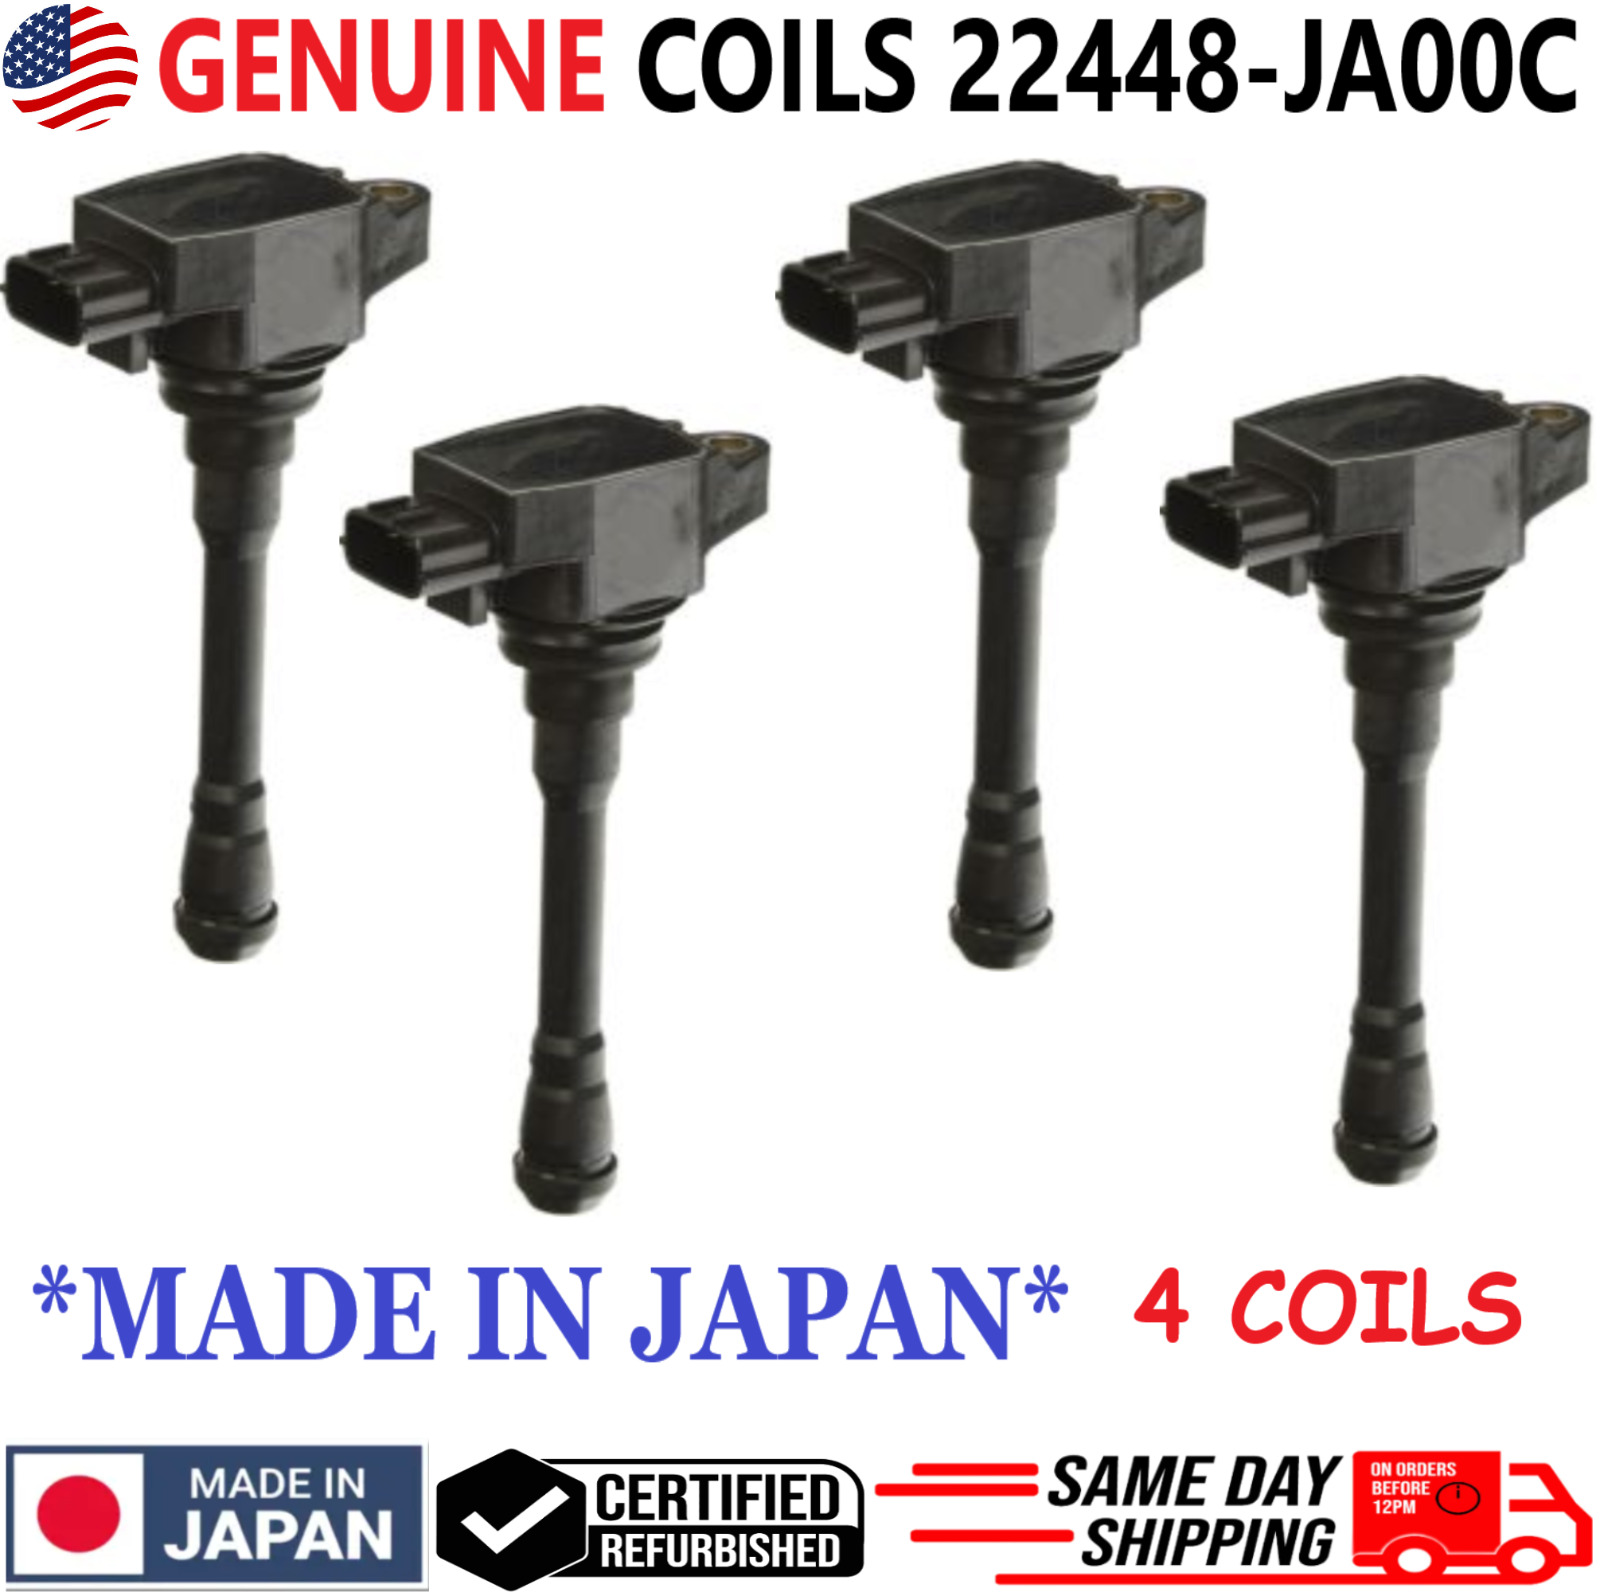 GENUINE NISSAN Ignition Coils For 2007-2019 Nissan & Infiniti I4 V8, 22448-JA00C